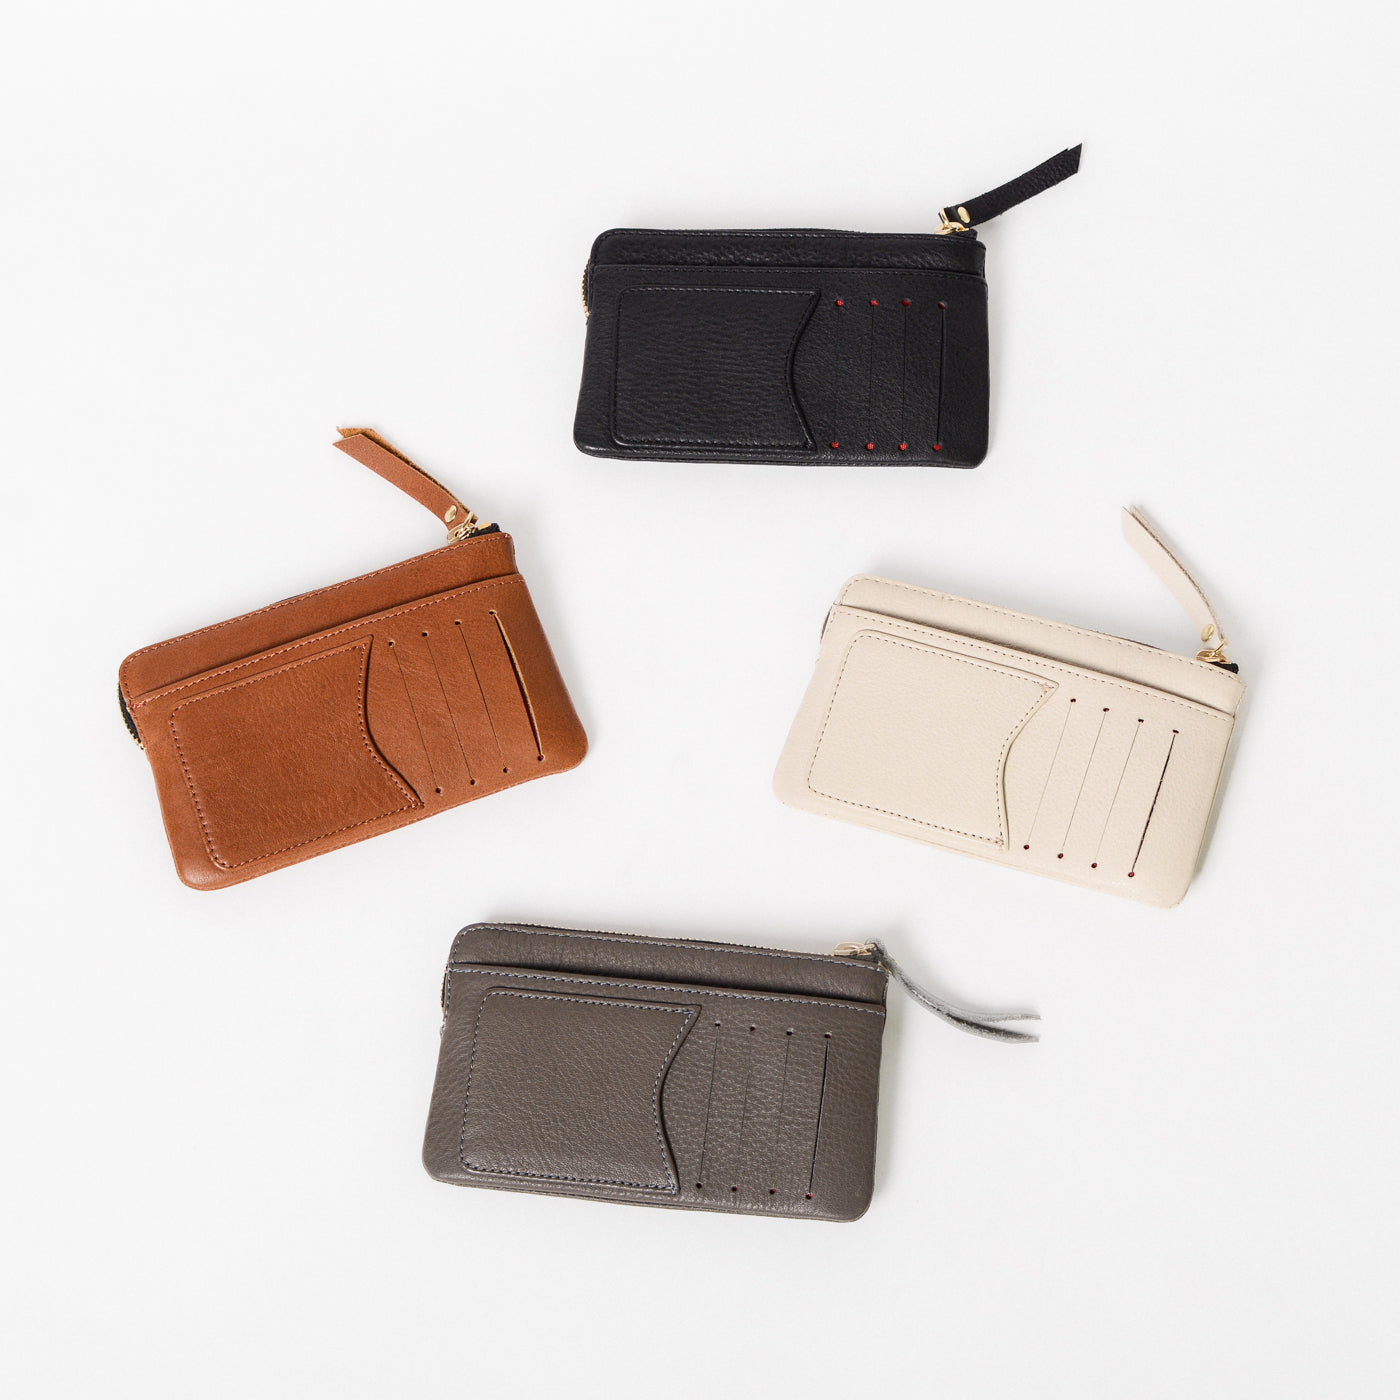 Pine and Drew Becca Textured Bag | Accessories, Handbags, Bags, White,  Vegan Leather | White handbag, Trending handbag, Leather